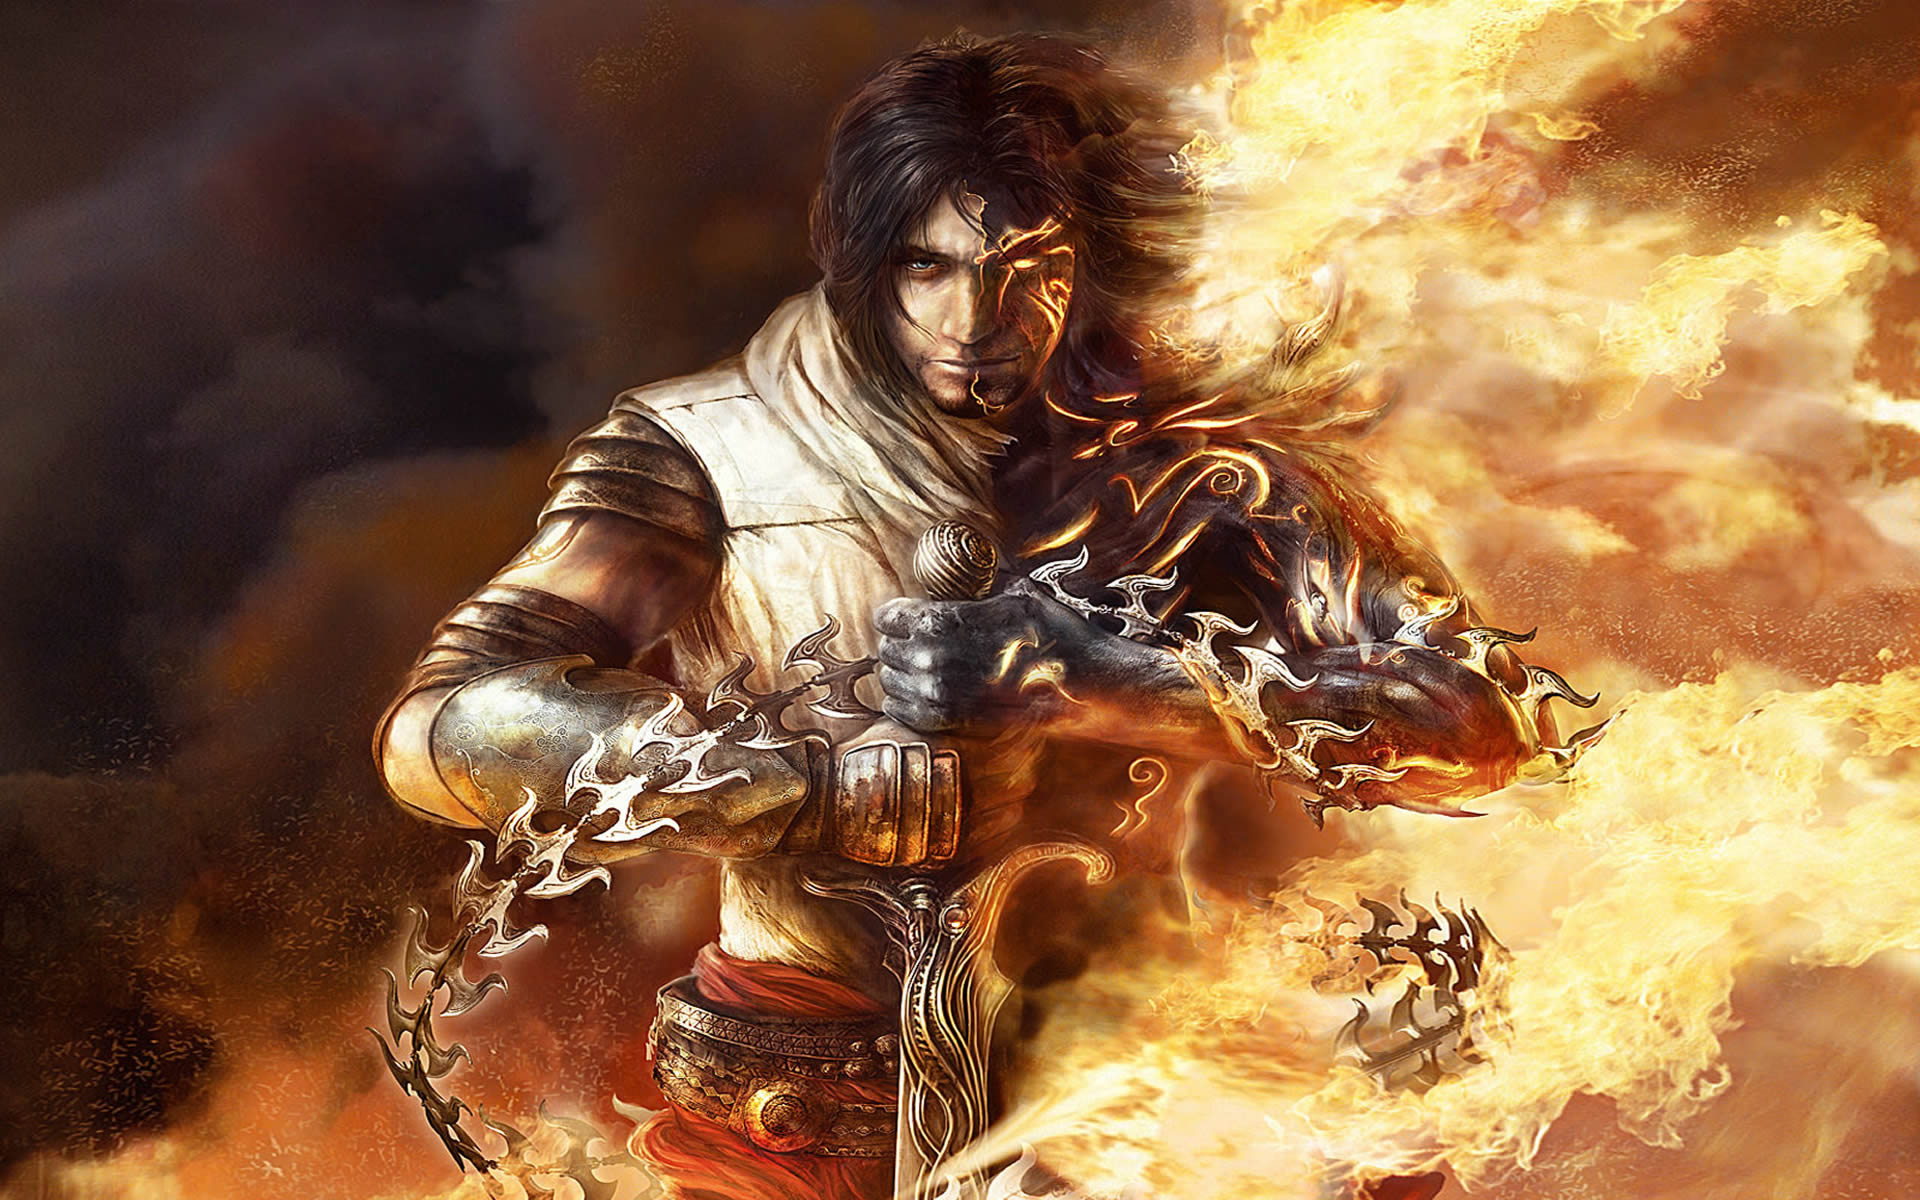 Flaming Dark Prince Of Persia Two Thrones Wallpaper